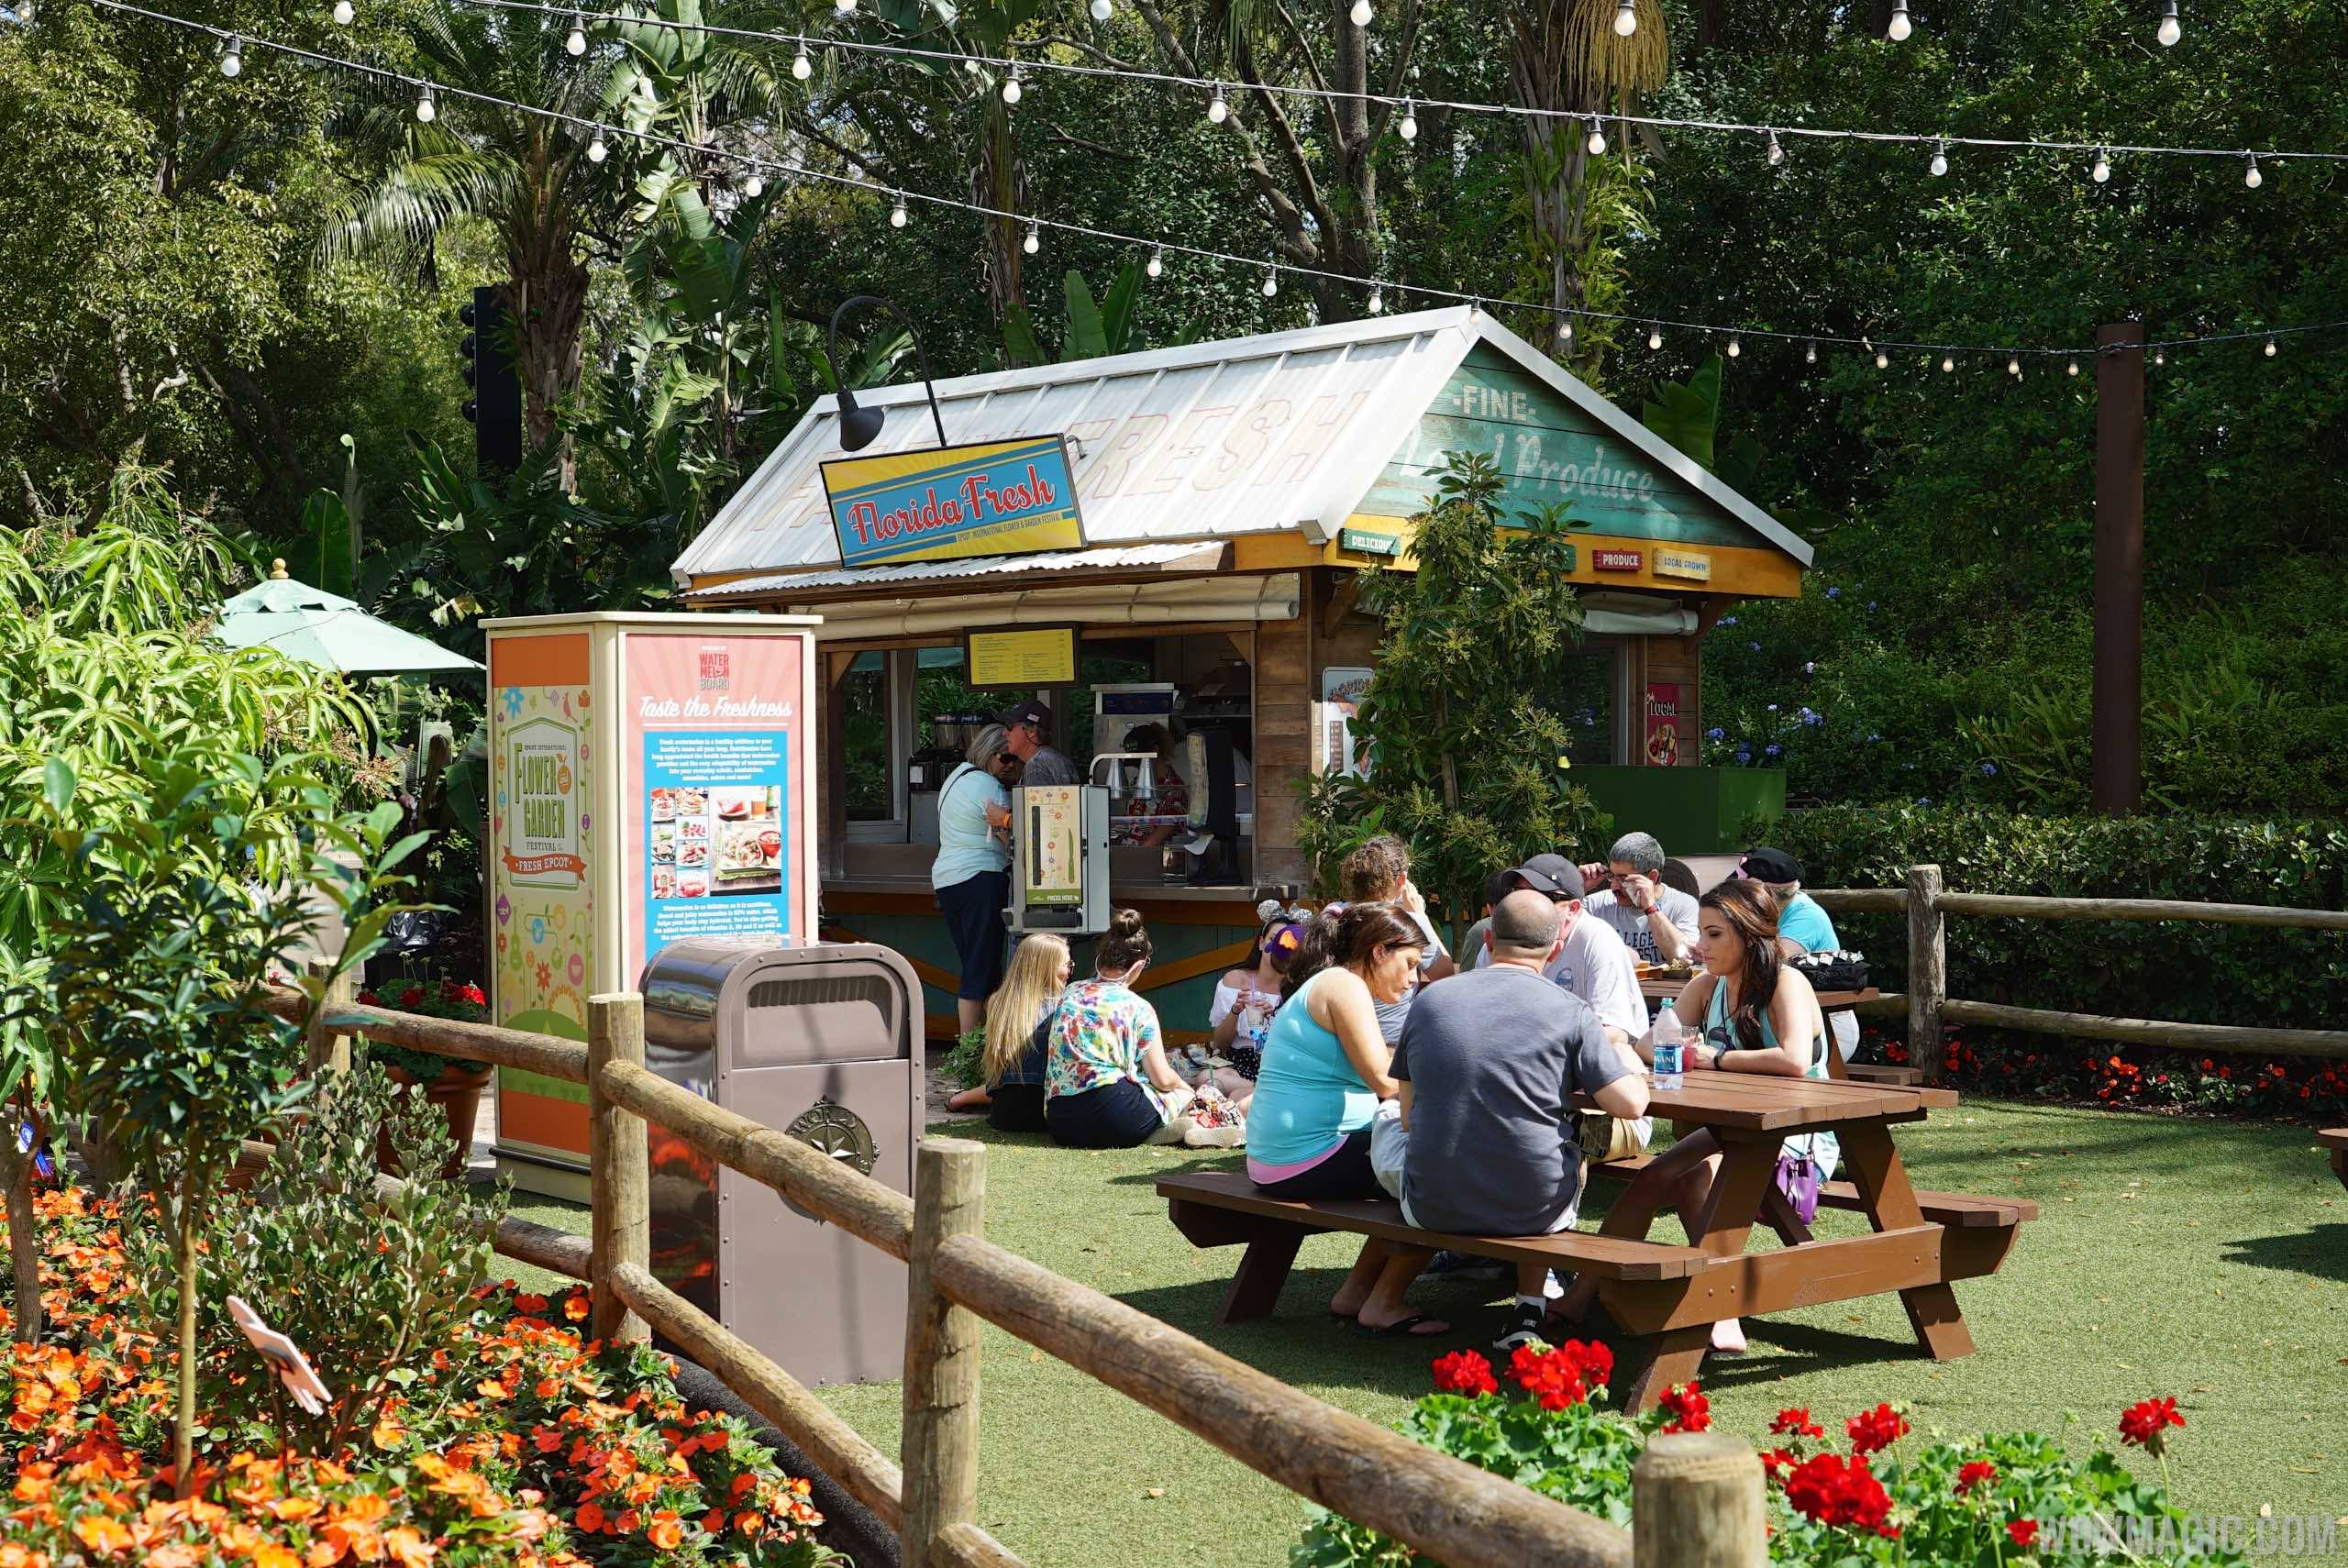 2015 Epcot Flower and Garden Festival Outdoor Kitchen - Florida Fresh kiosk